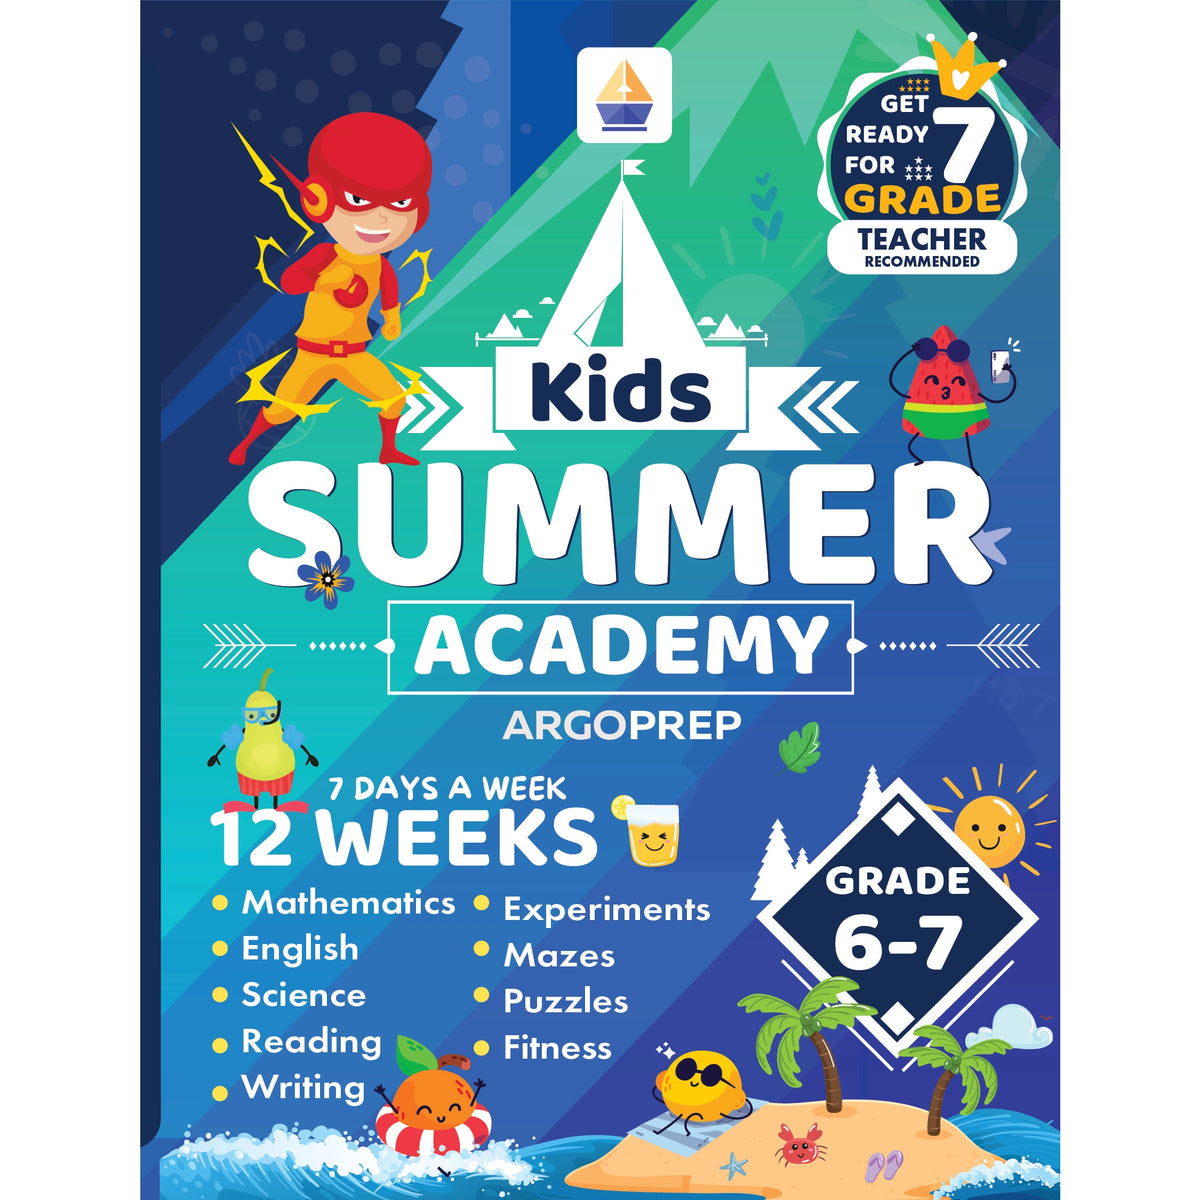 Kids Summer Academy by ArgoPrep: Grade 6-7